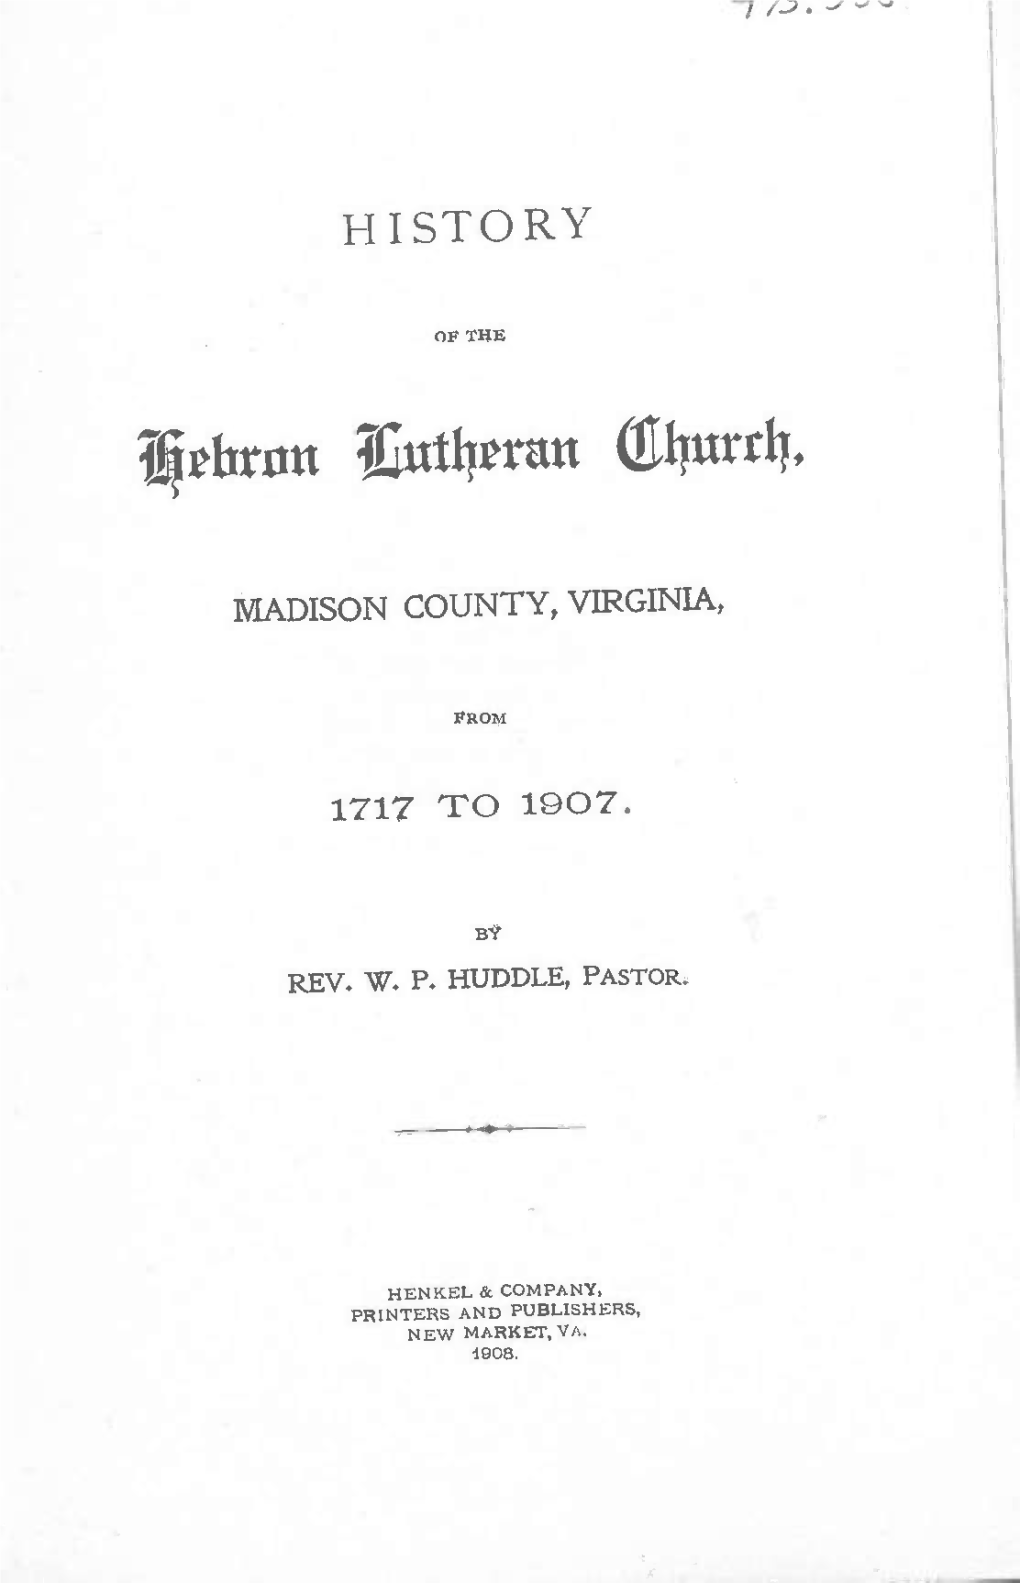 History of the Hebron Lutheran Church, Madison County, Virginia